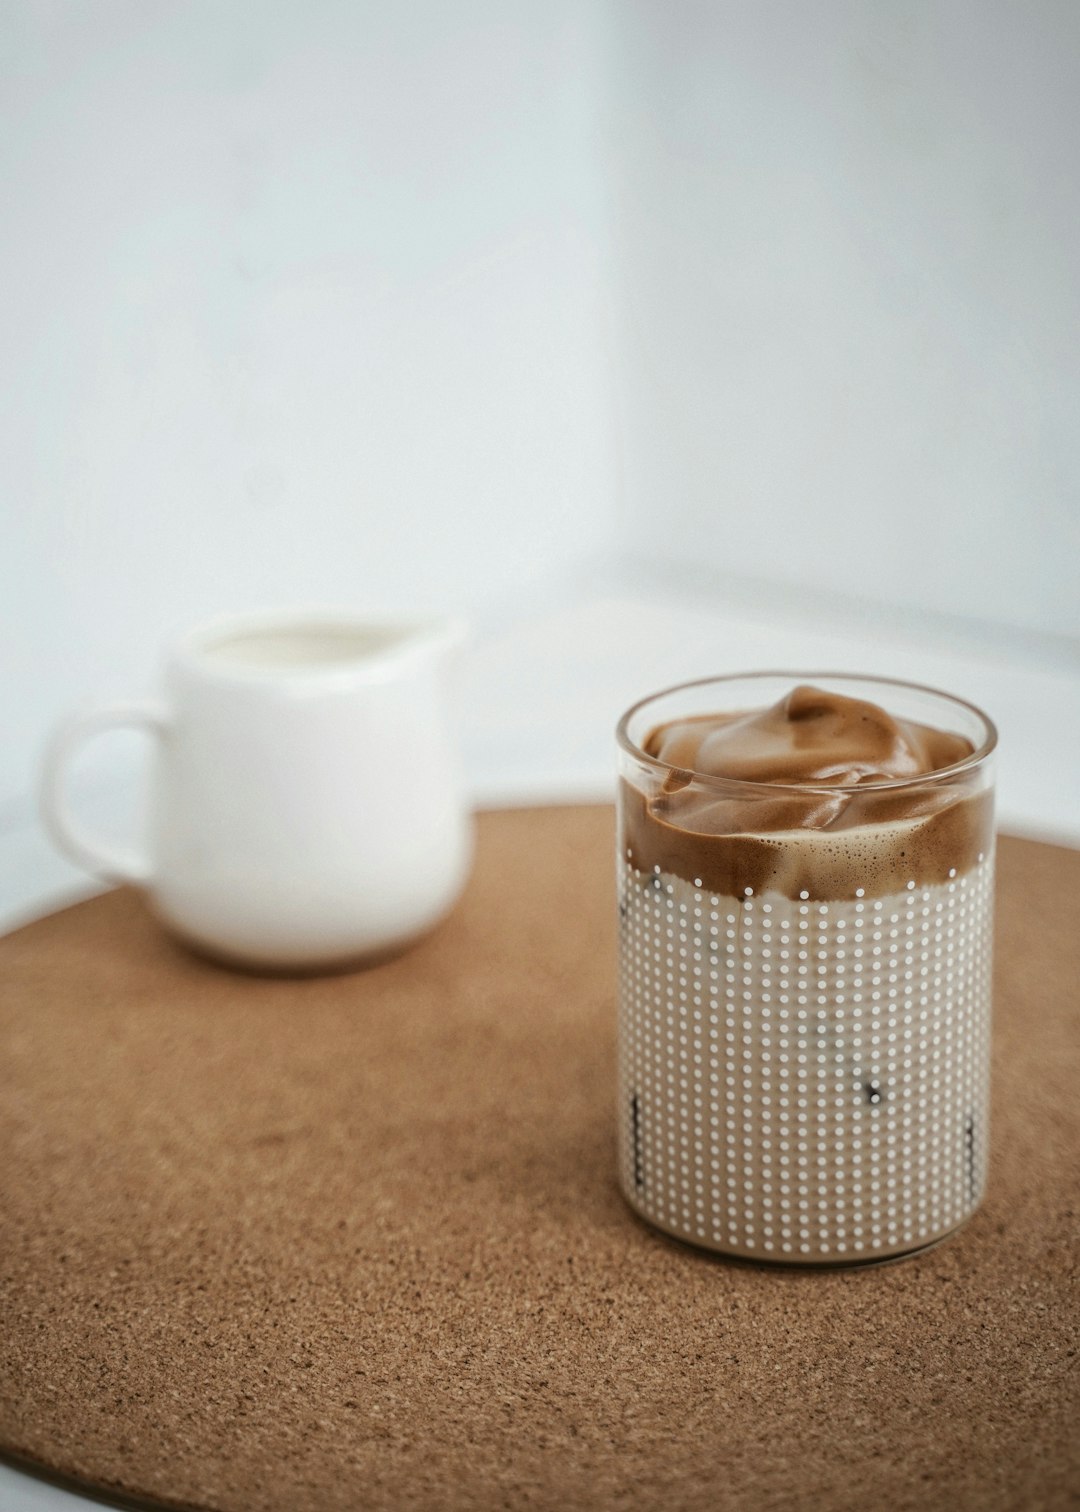 white ceramic mug with brown liquid inside